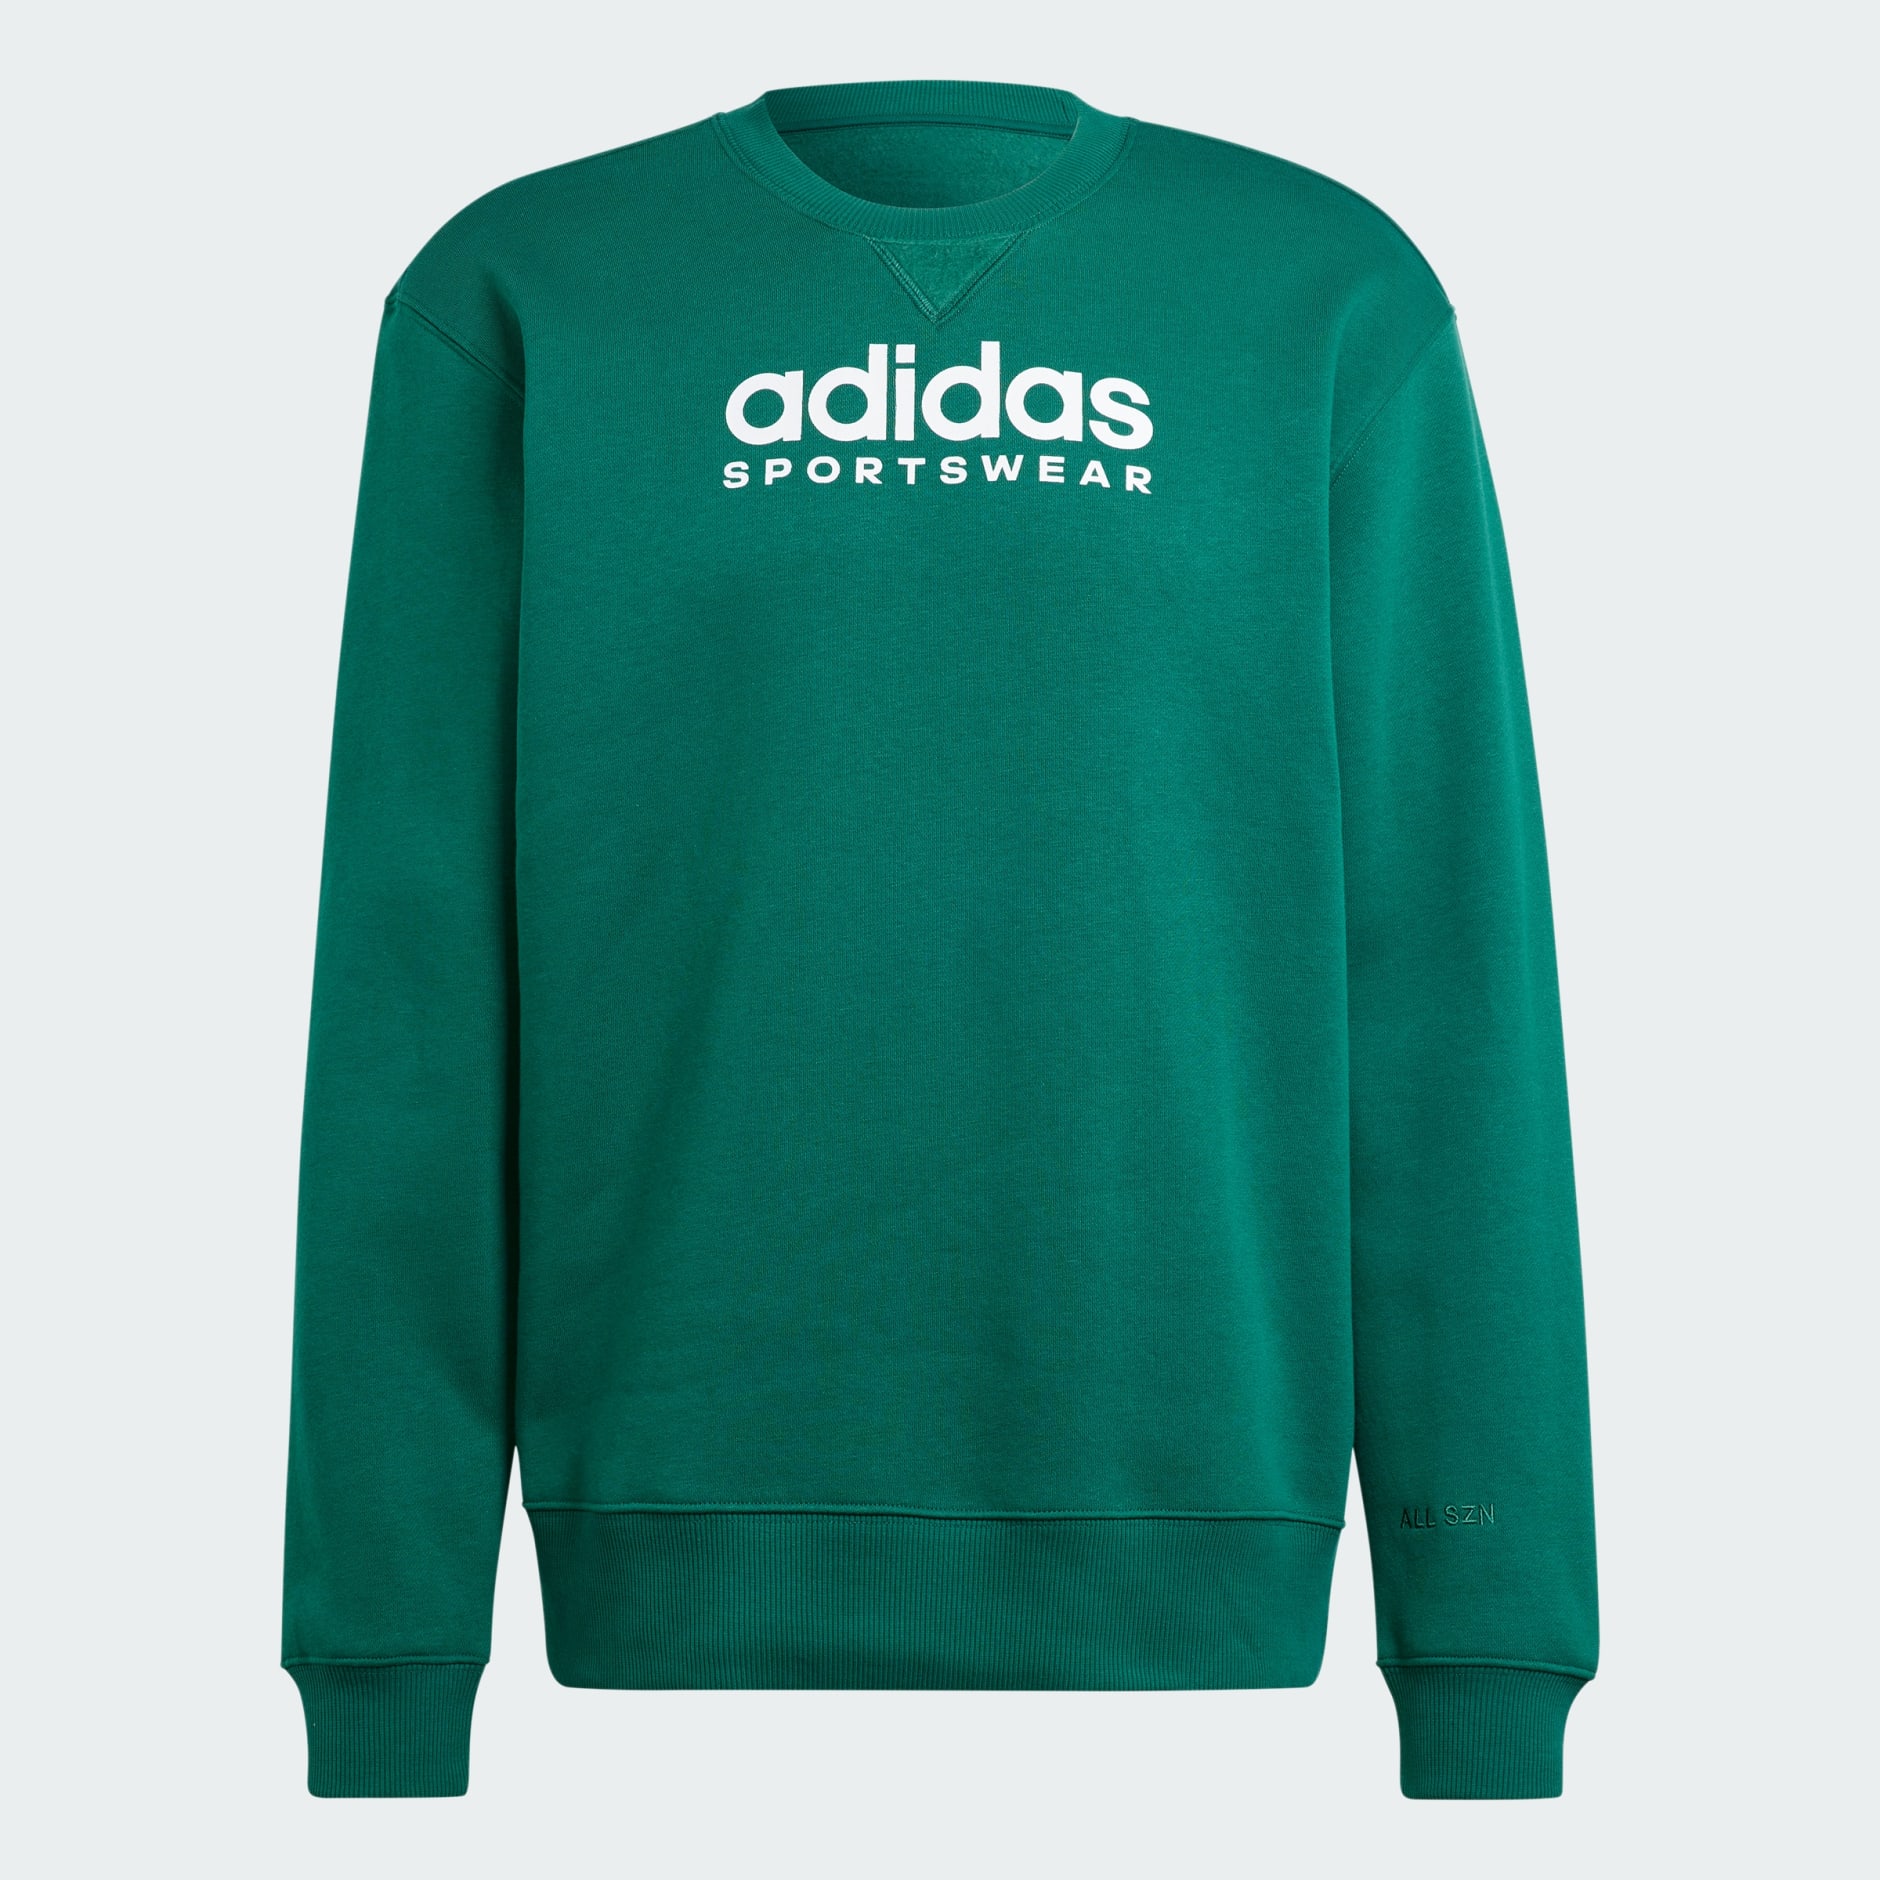 Fleece Arabia | - All SZN Graphic Green Sweatshirts - adidas Saudi Sweatshirt